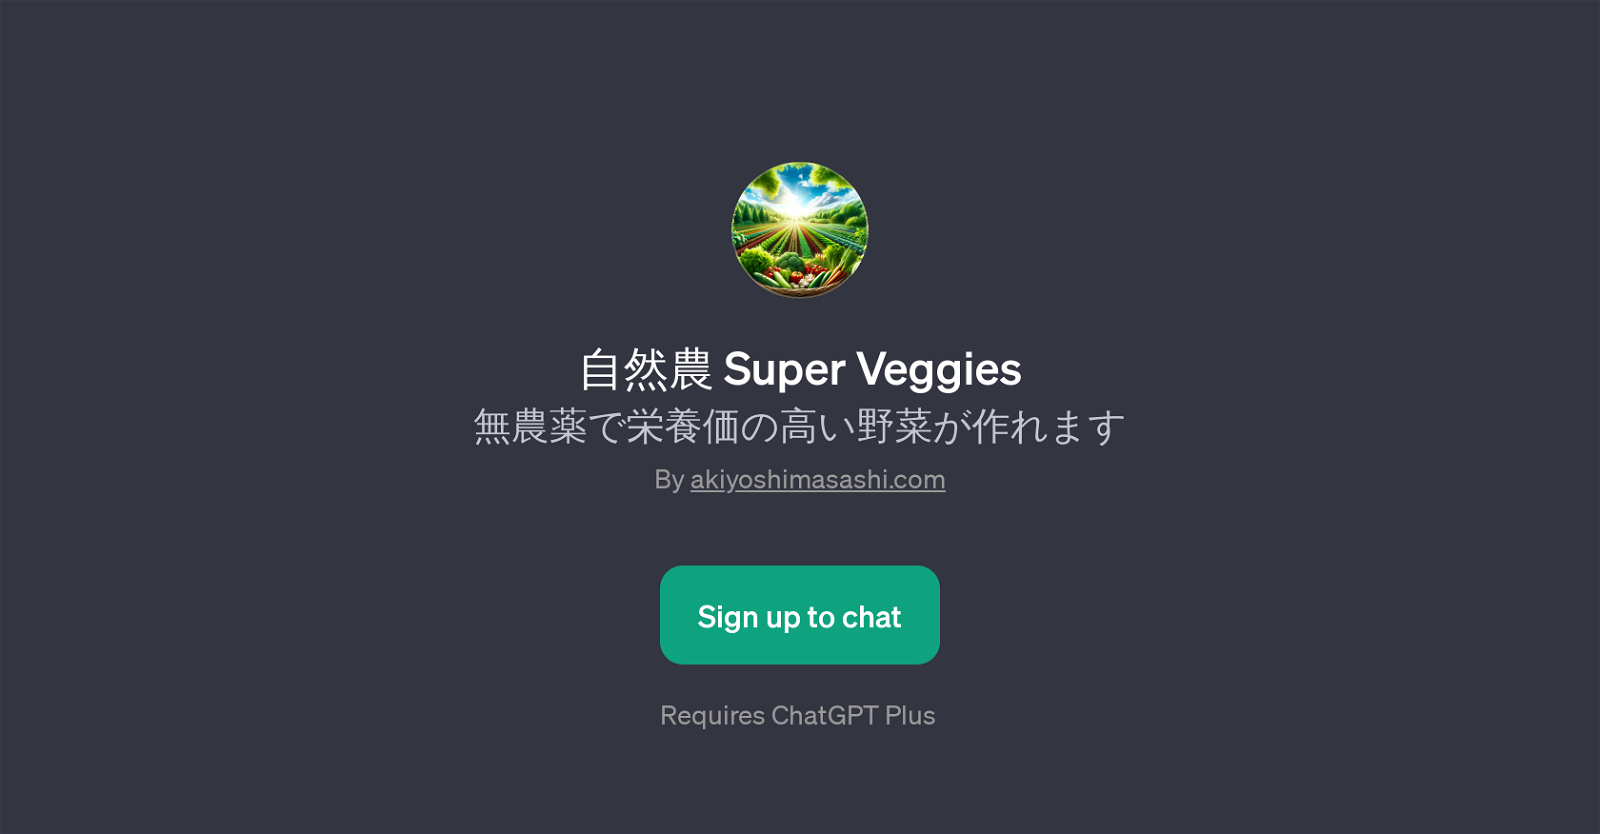 Super Veggies website